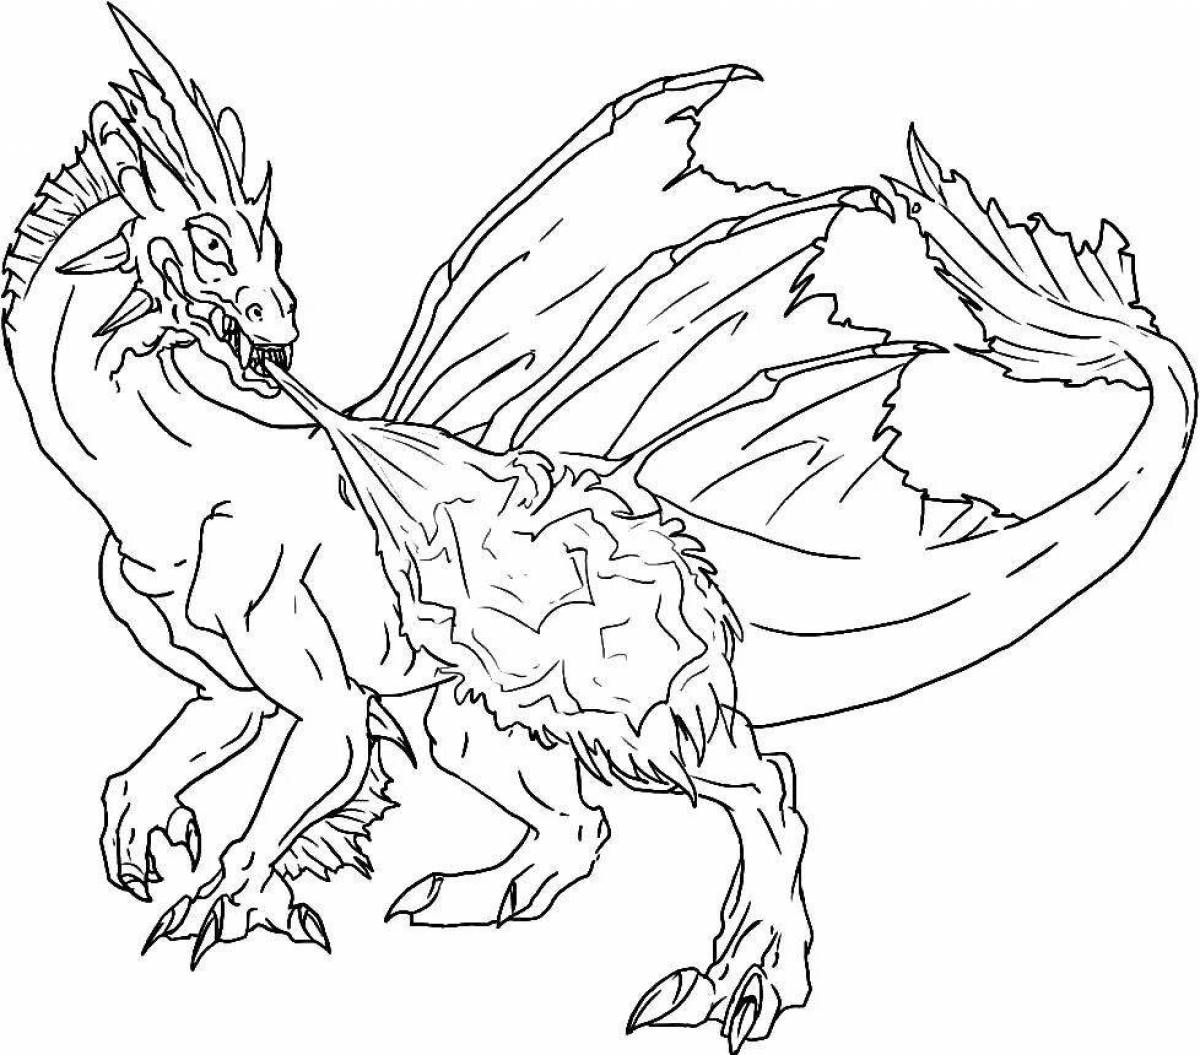 Sublime coloring page dragon figure